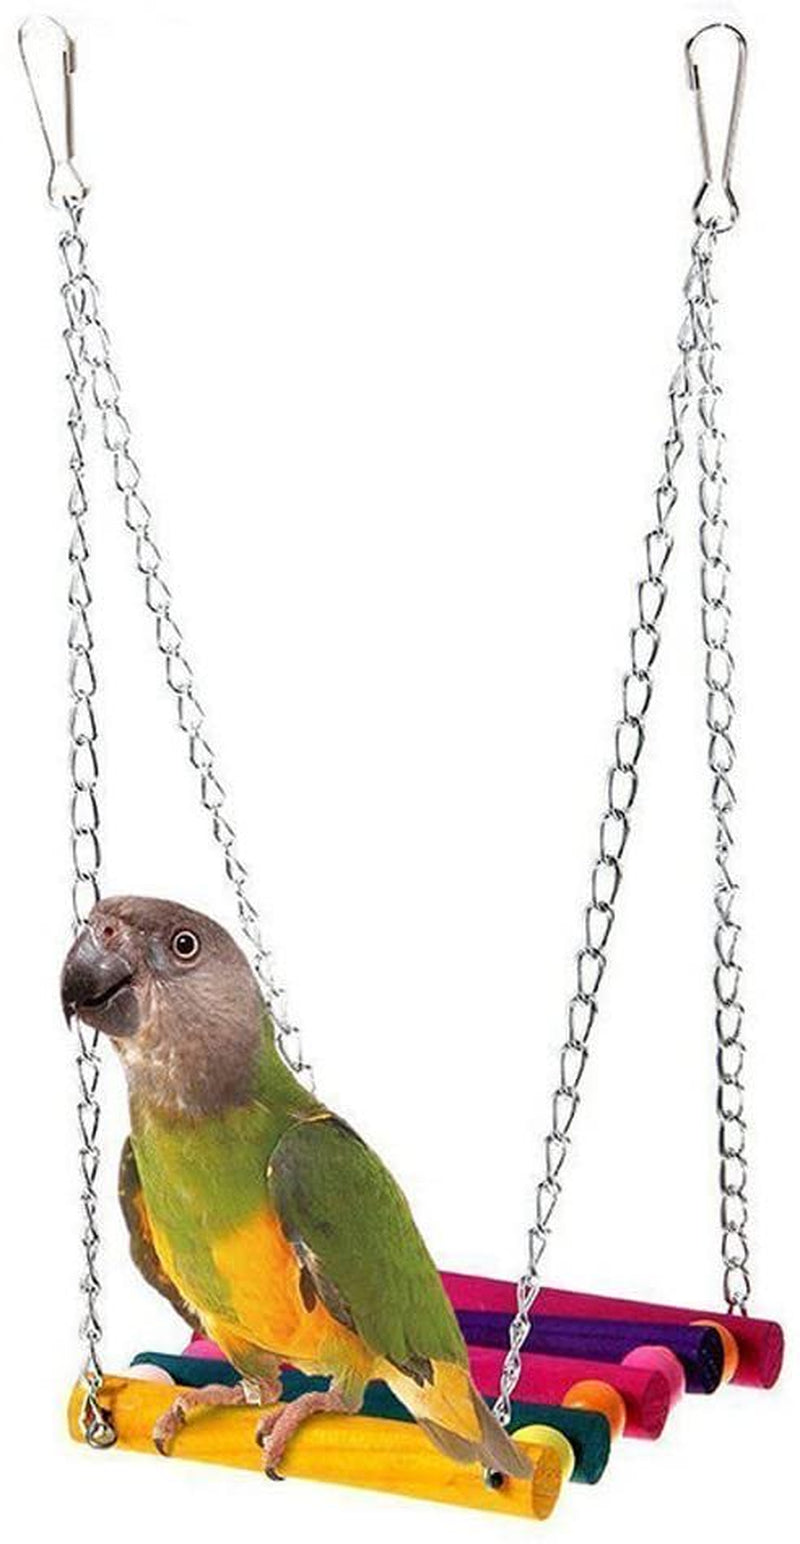 For Pet Bird Parrot Parakeet Budgie Cockatiel Cage Hammock Swing Hanging Toy Accessories Animals & Pet Supplies > Pet Supplies > Bird Supplies > Bird Cage Accessories Peysaitr   